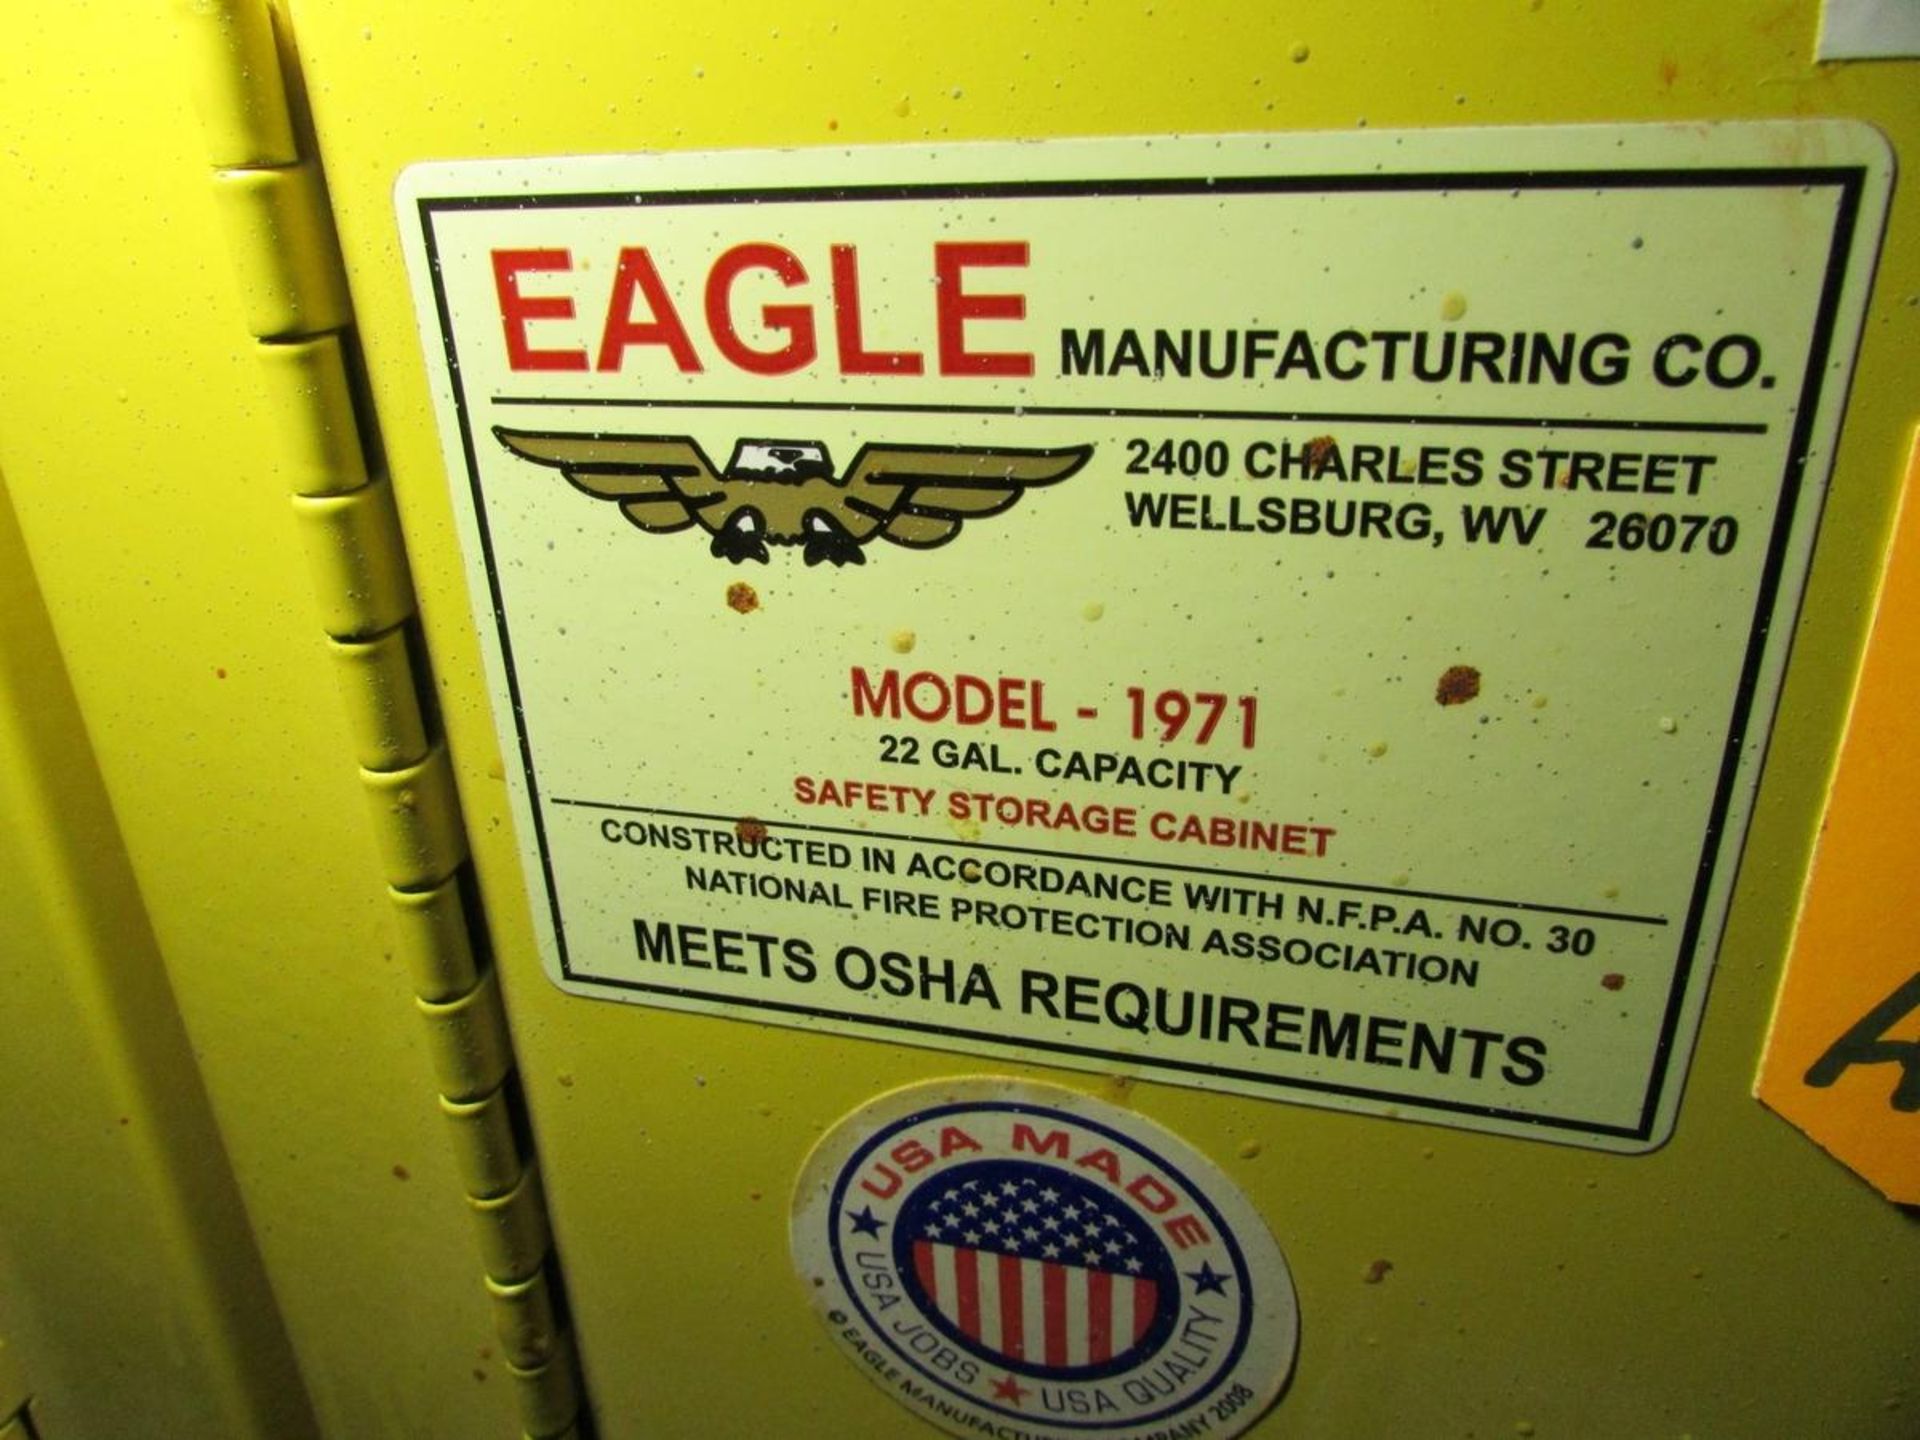 Eagle 1971 Safety Storage Cabinet (22 Gal. Capacity) - Image 4 of 4